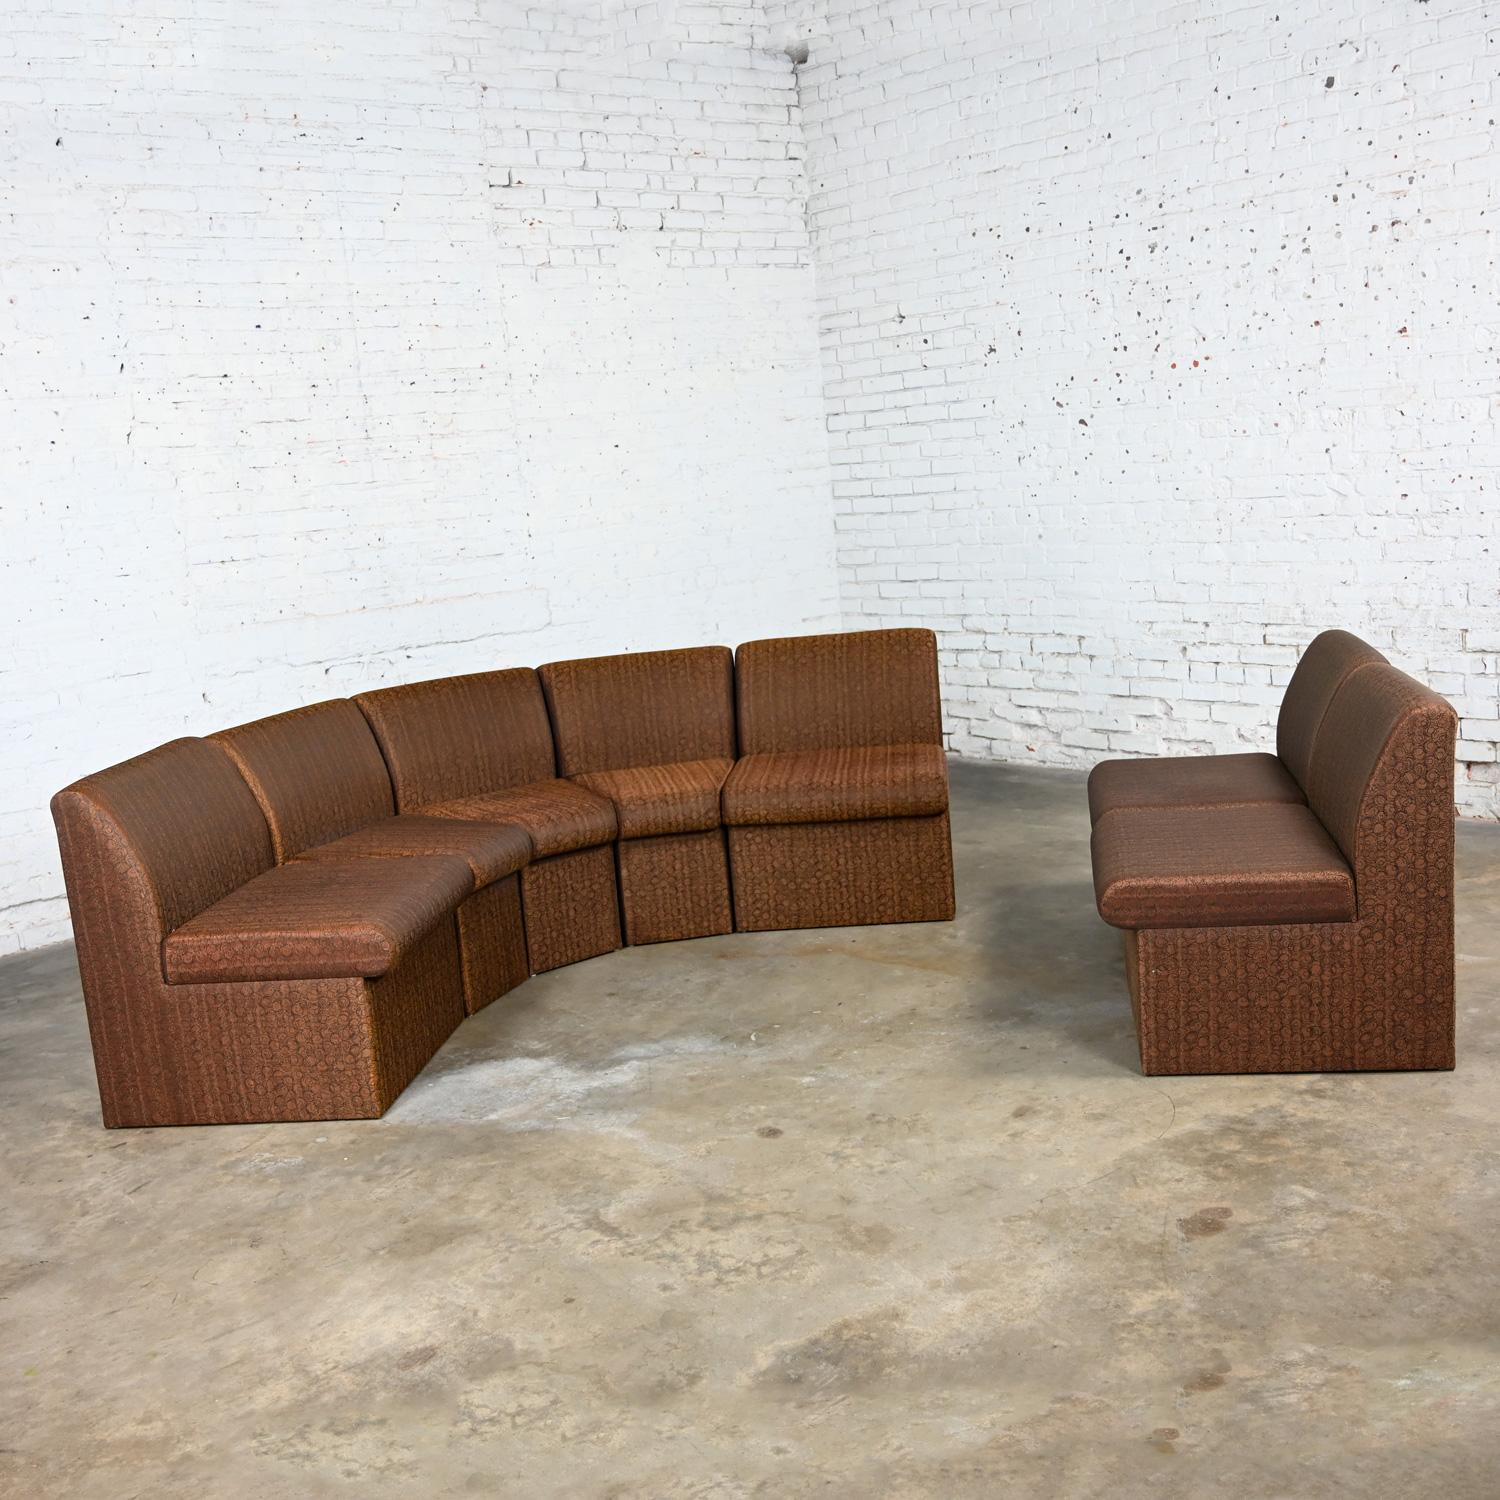 Fin du 20e siècle Modernity Global Upholstery Company Canapé sectionnel 7 pièces Brown en vente 1